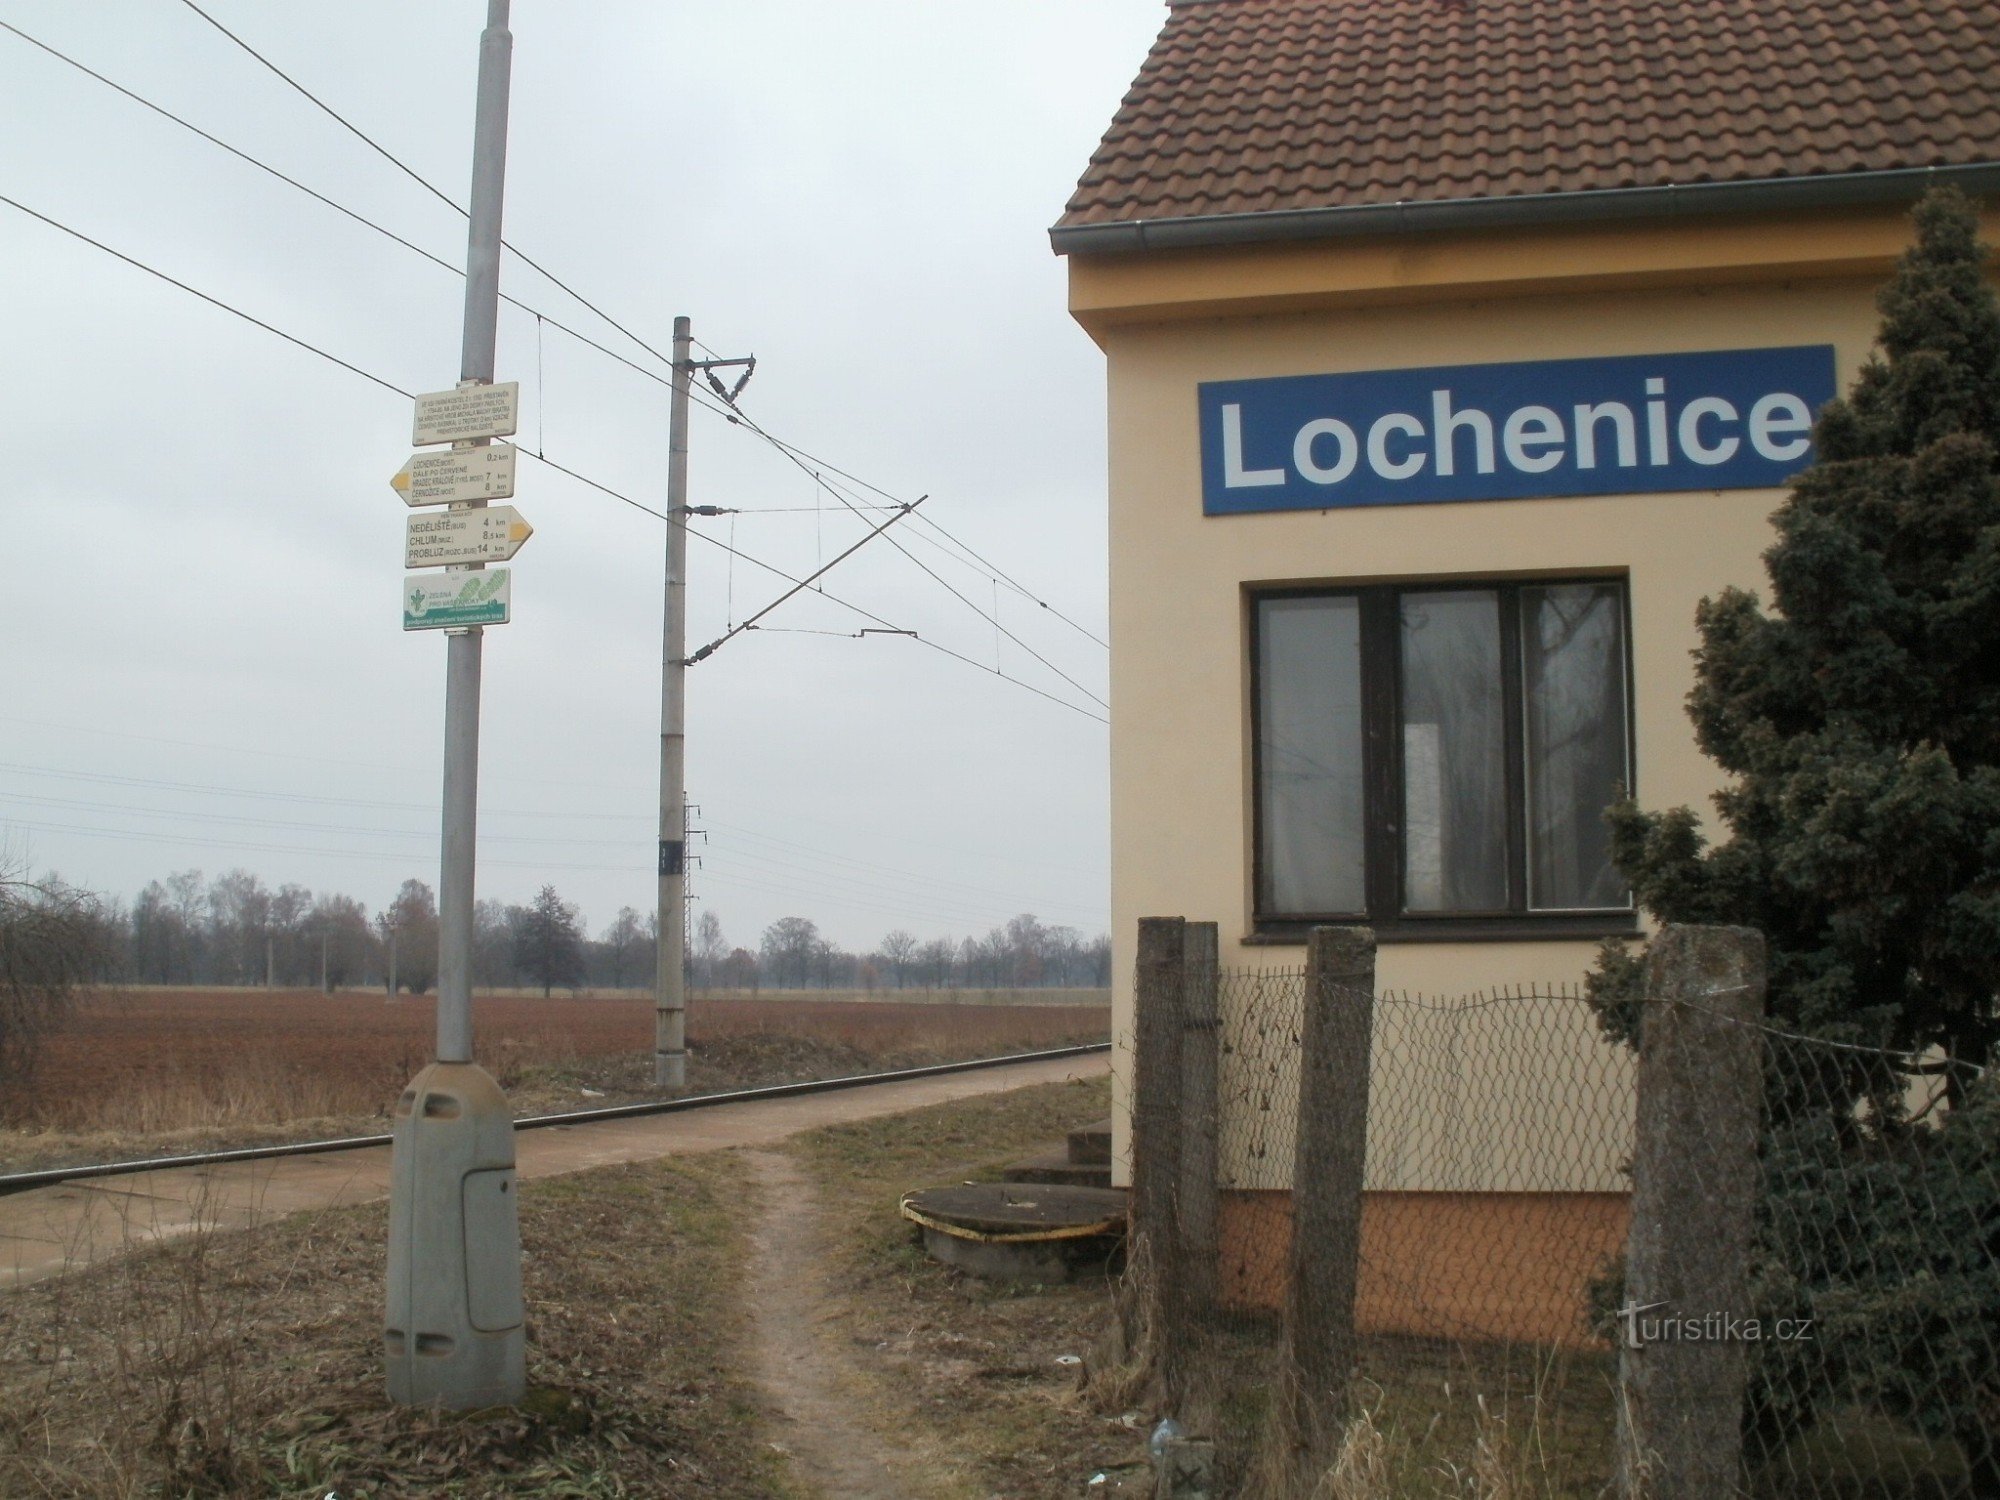 turist knudepunkt Lochenice - jernbane